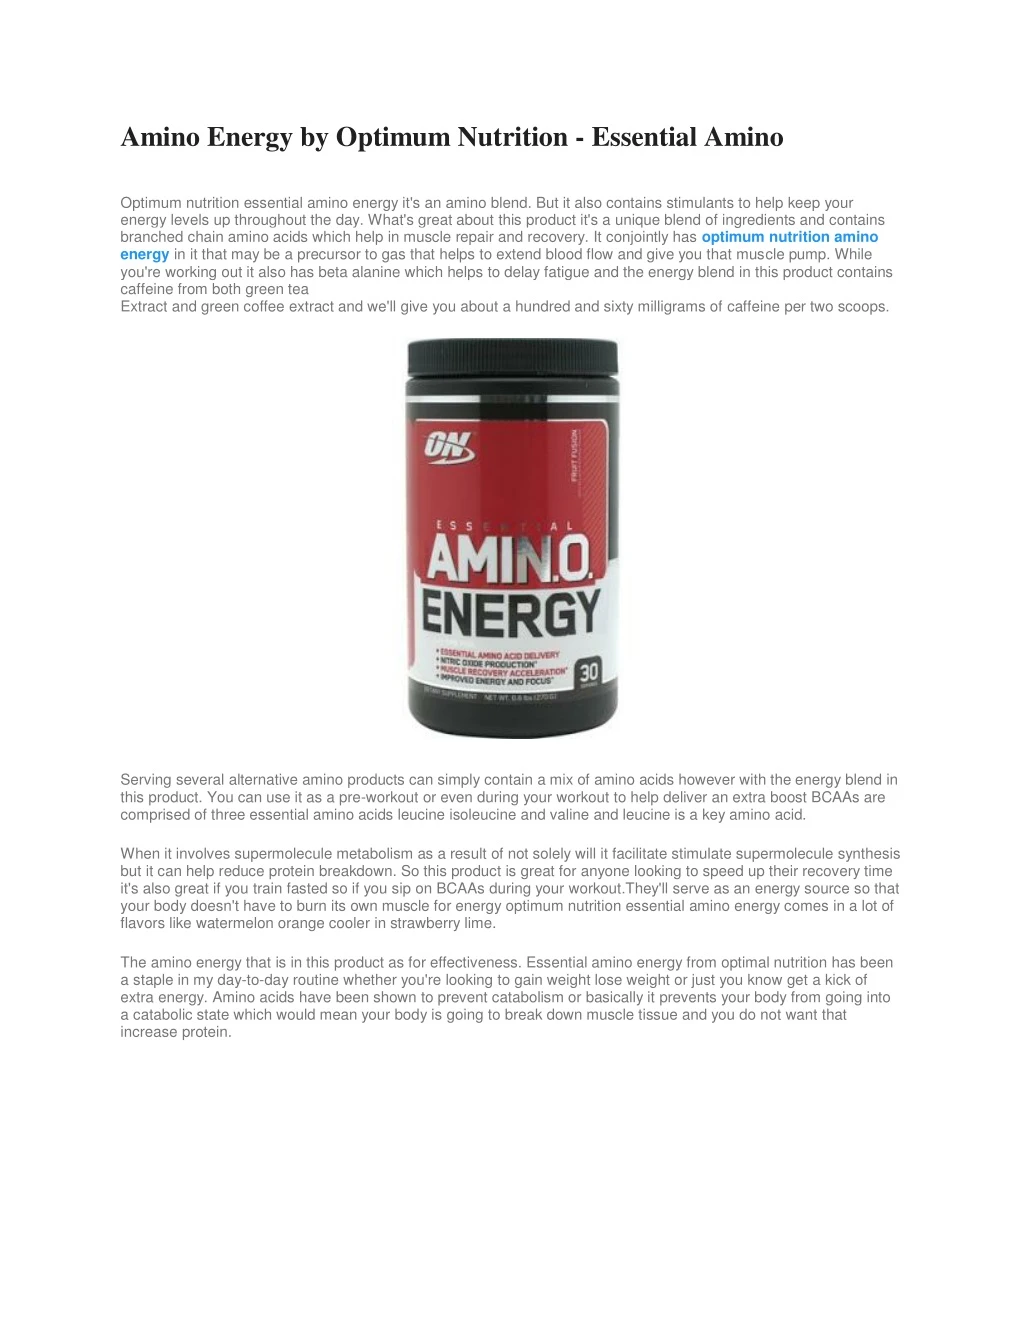 amino energy by optimum nutrition essential amino